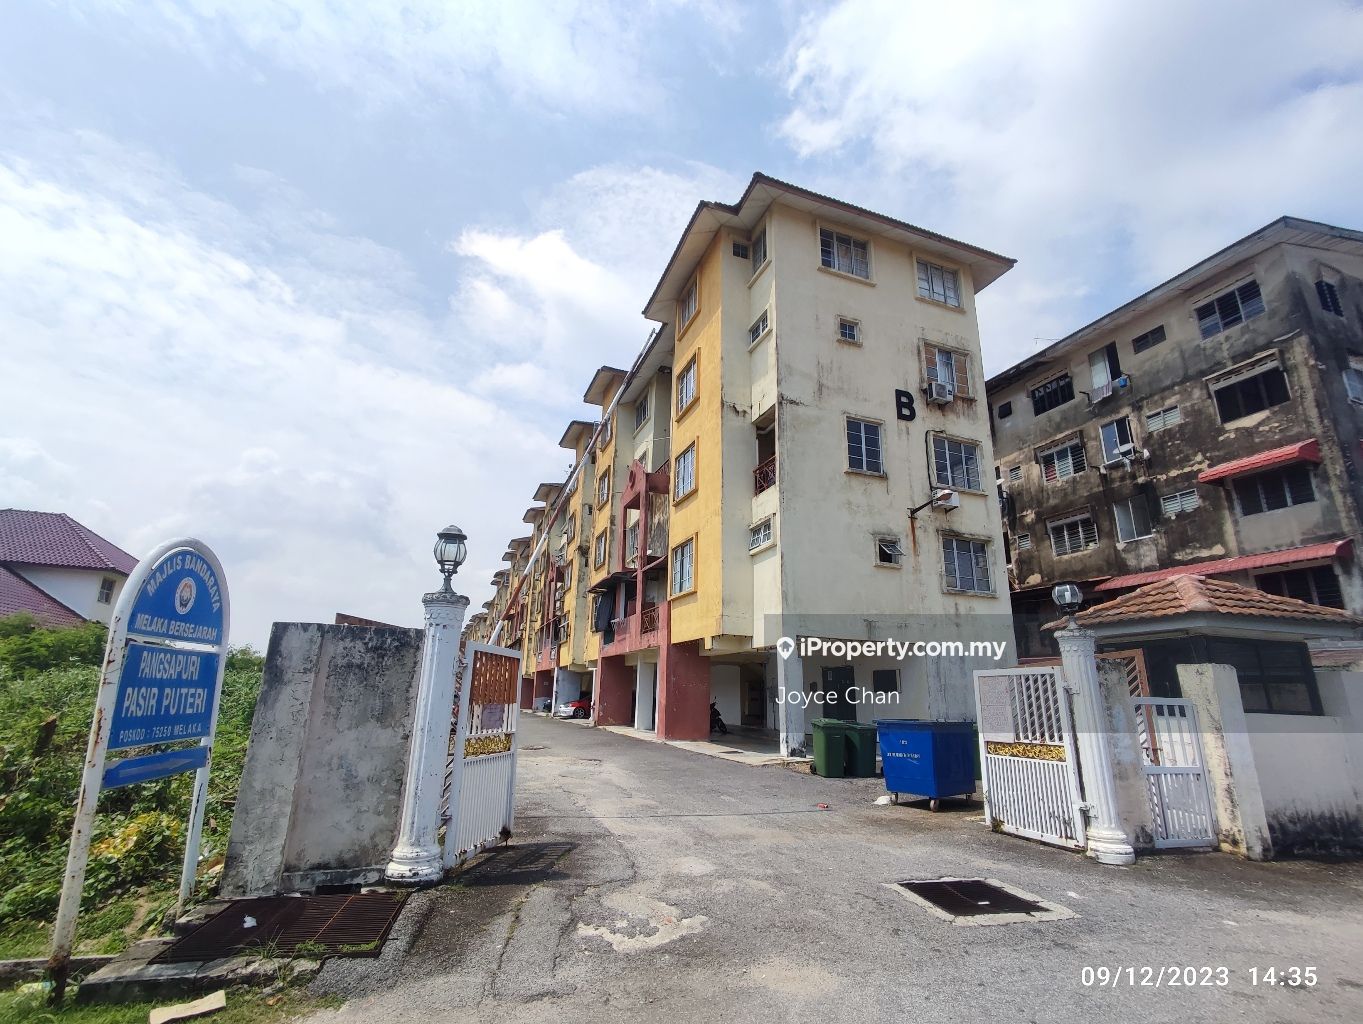 Freehold Pasir Puteri Apartment in Ujong Pasir, Melaka